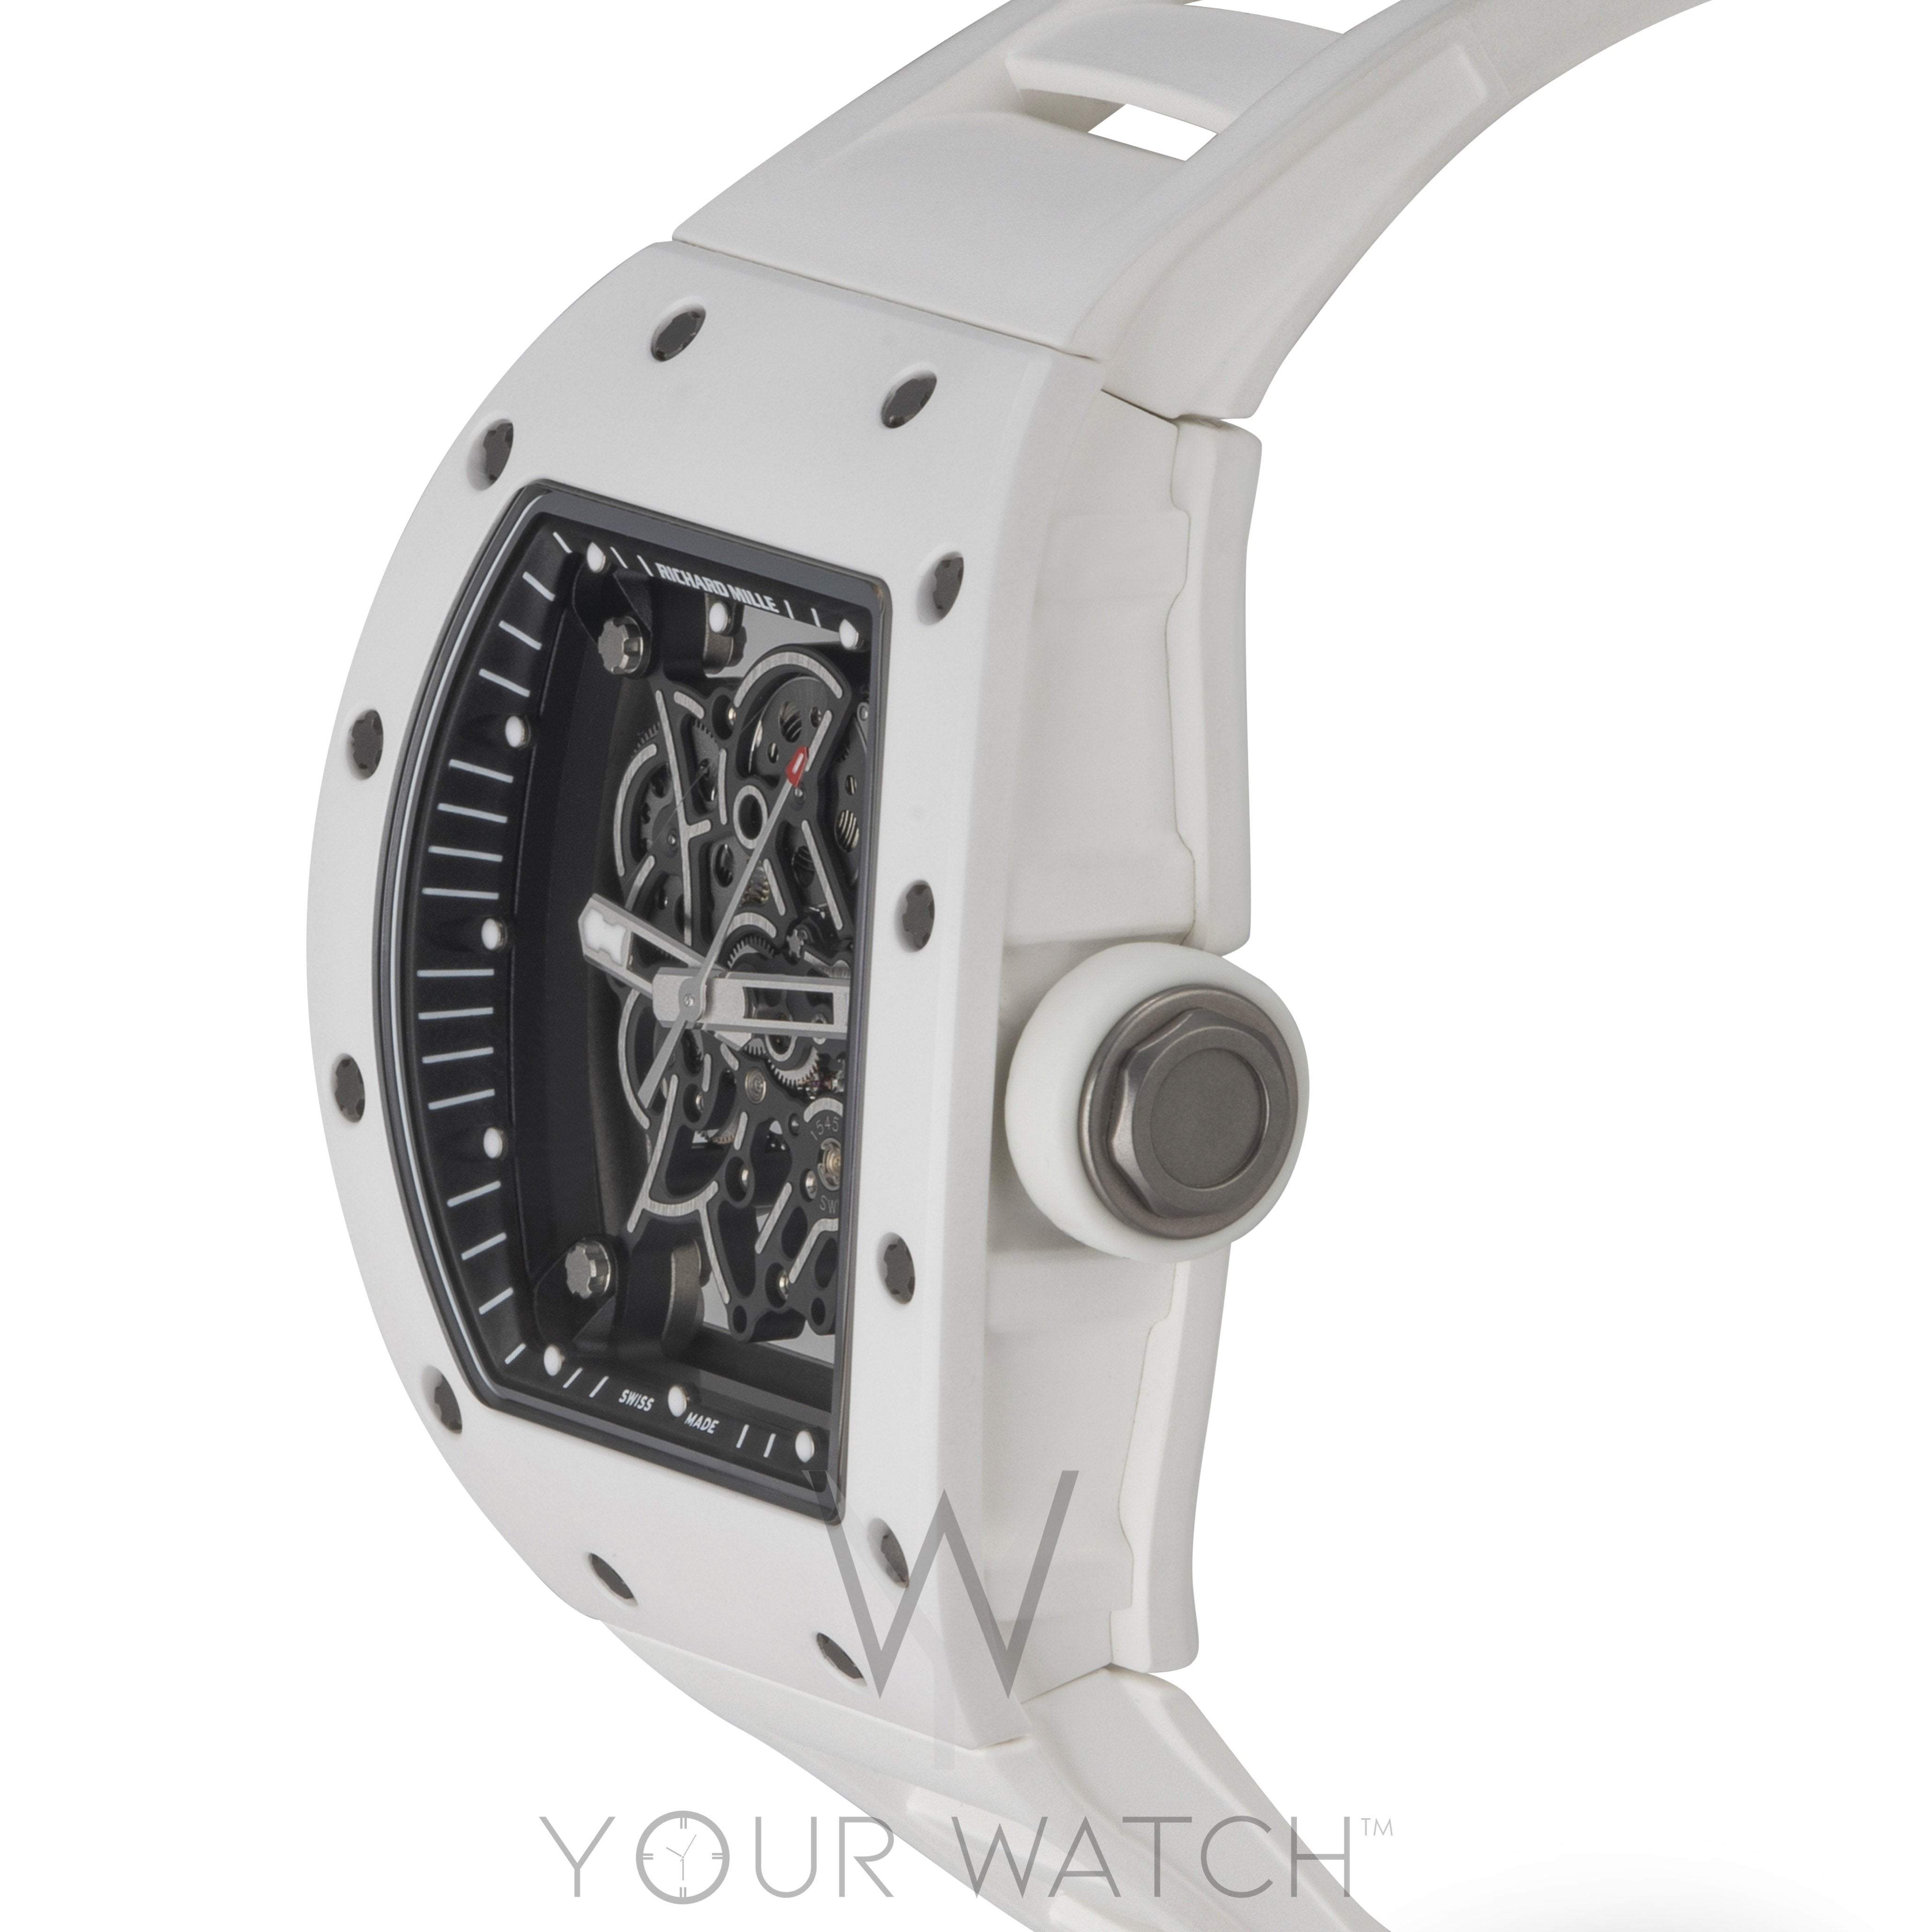 Richard Mille RM 055 Bubba Watson Review – RM55 Luxury Watch - YouTube